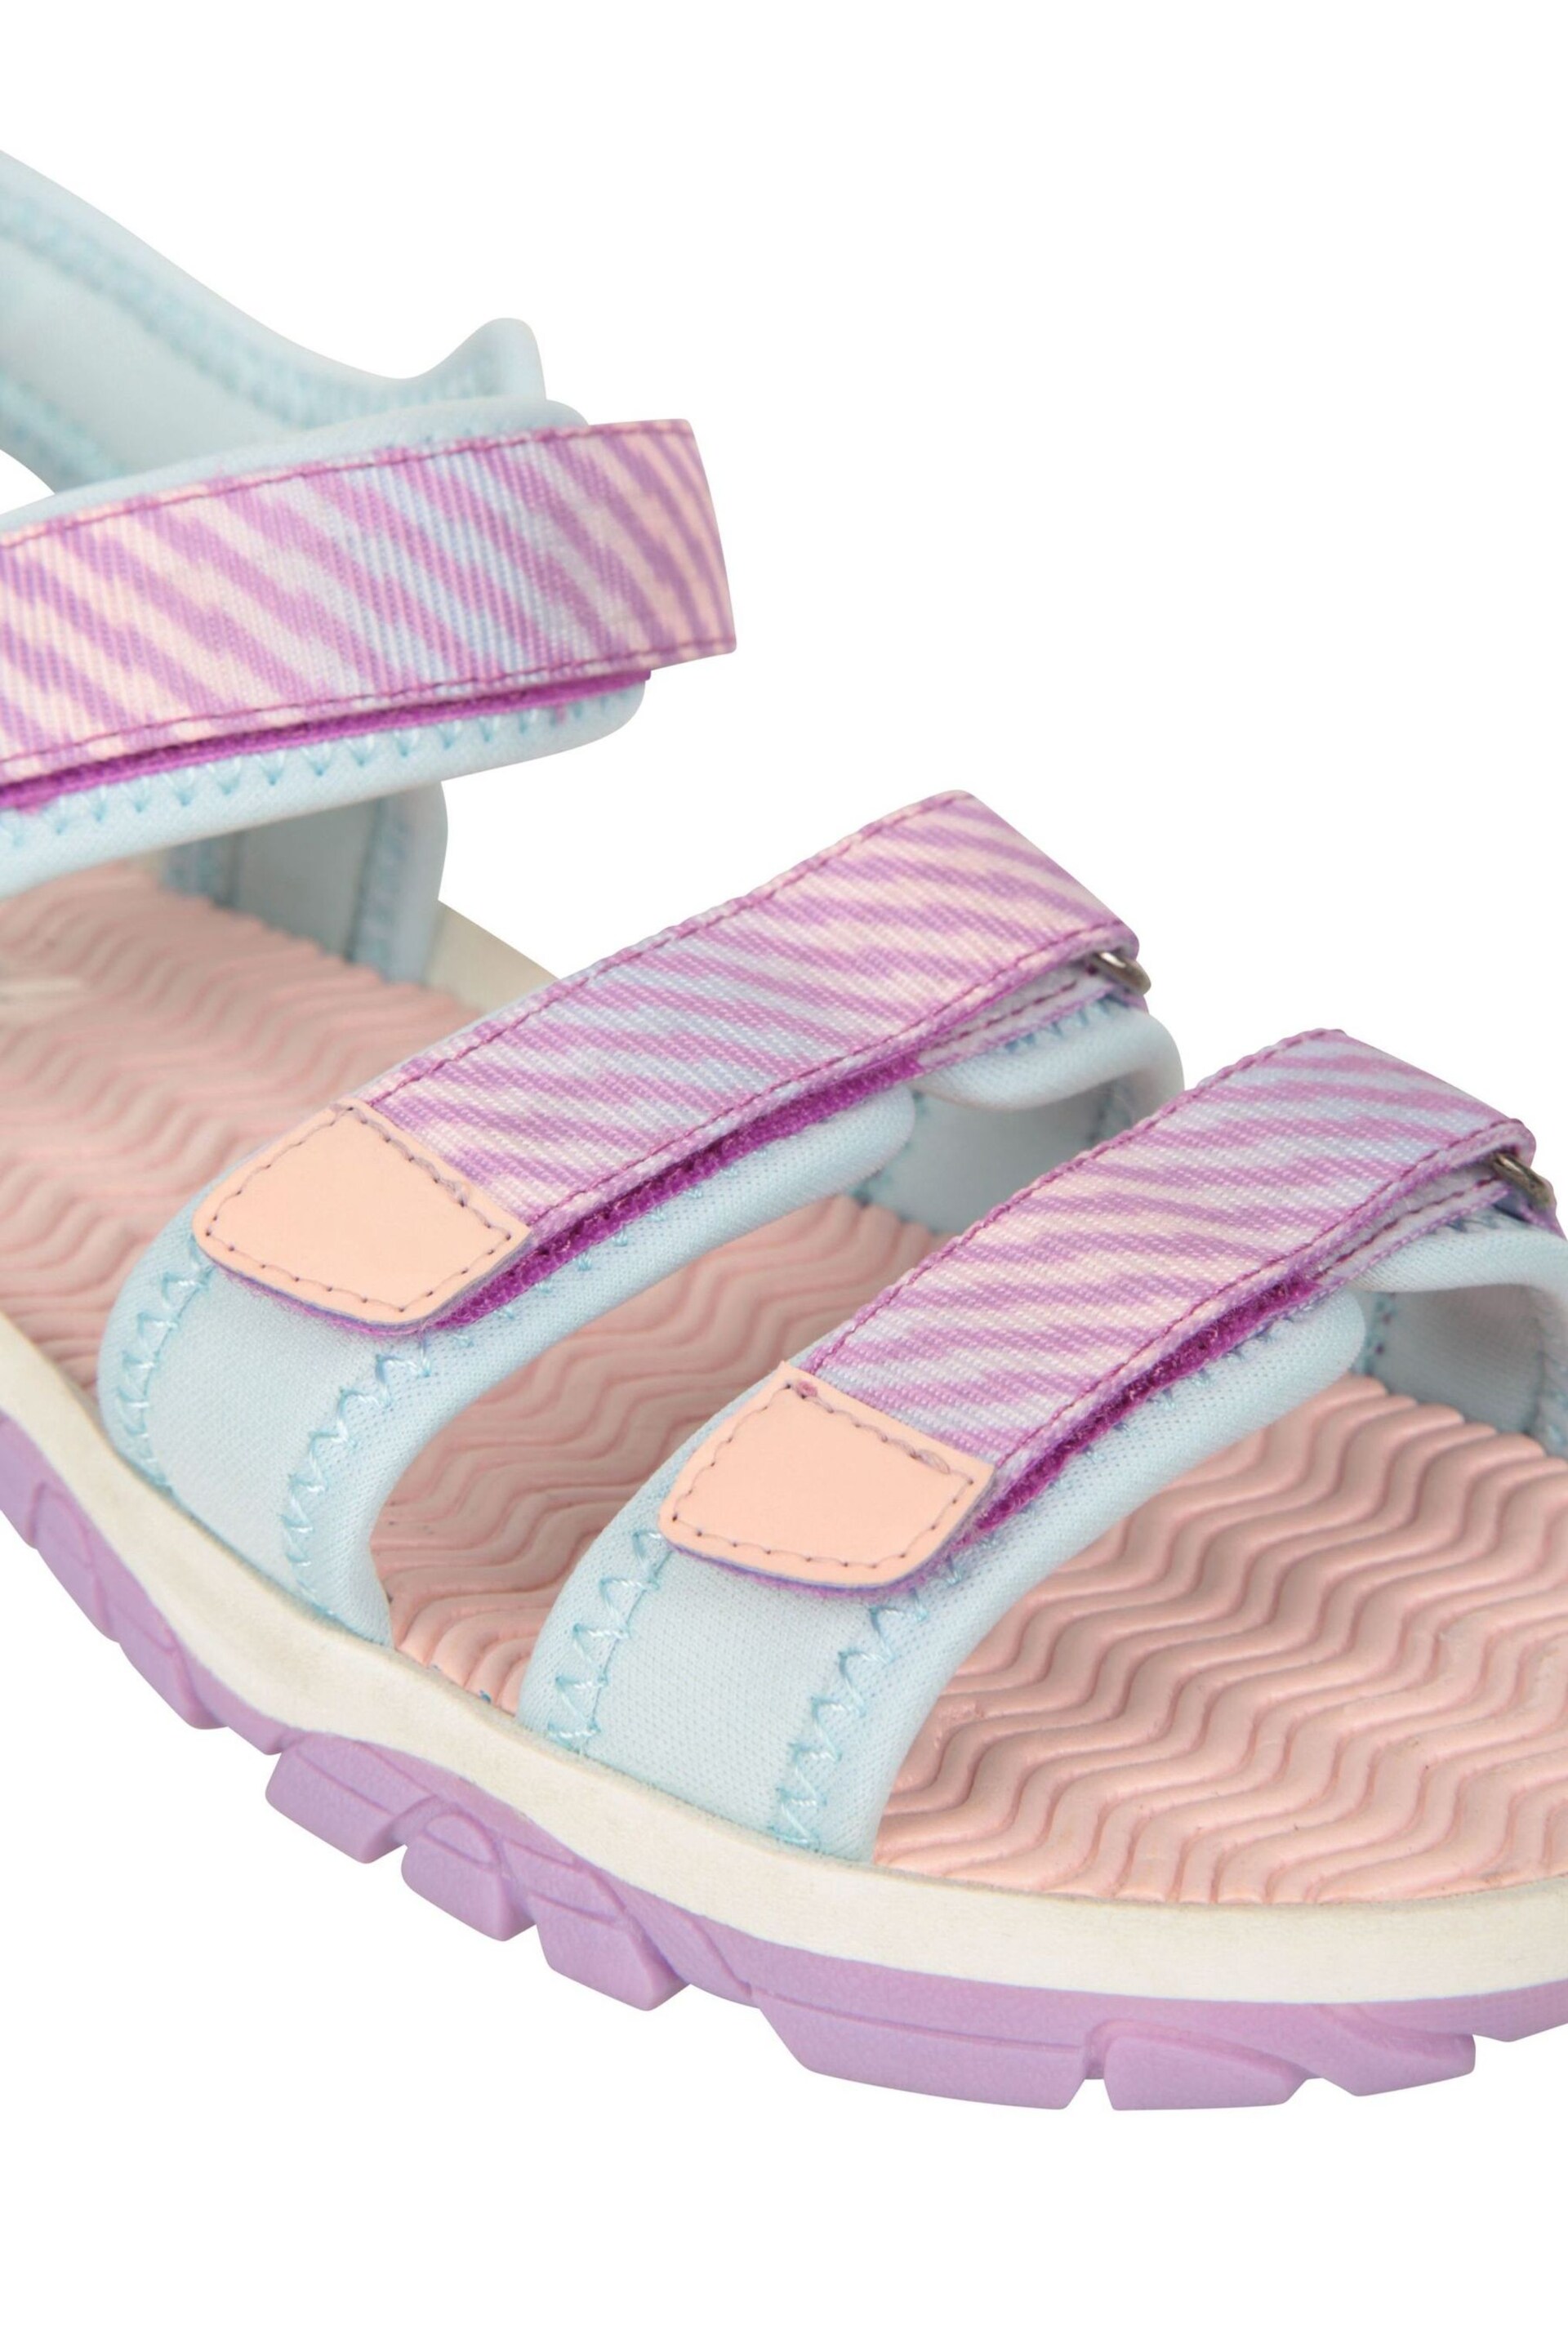 Mountain Warehouse Purple Kids 3-Strap Sandals - Image 8 of 8